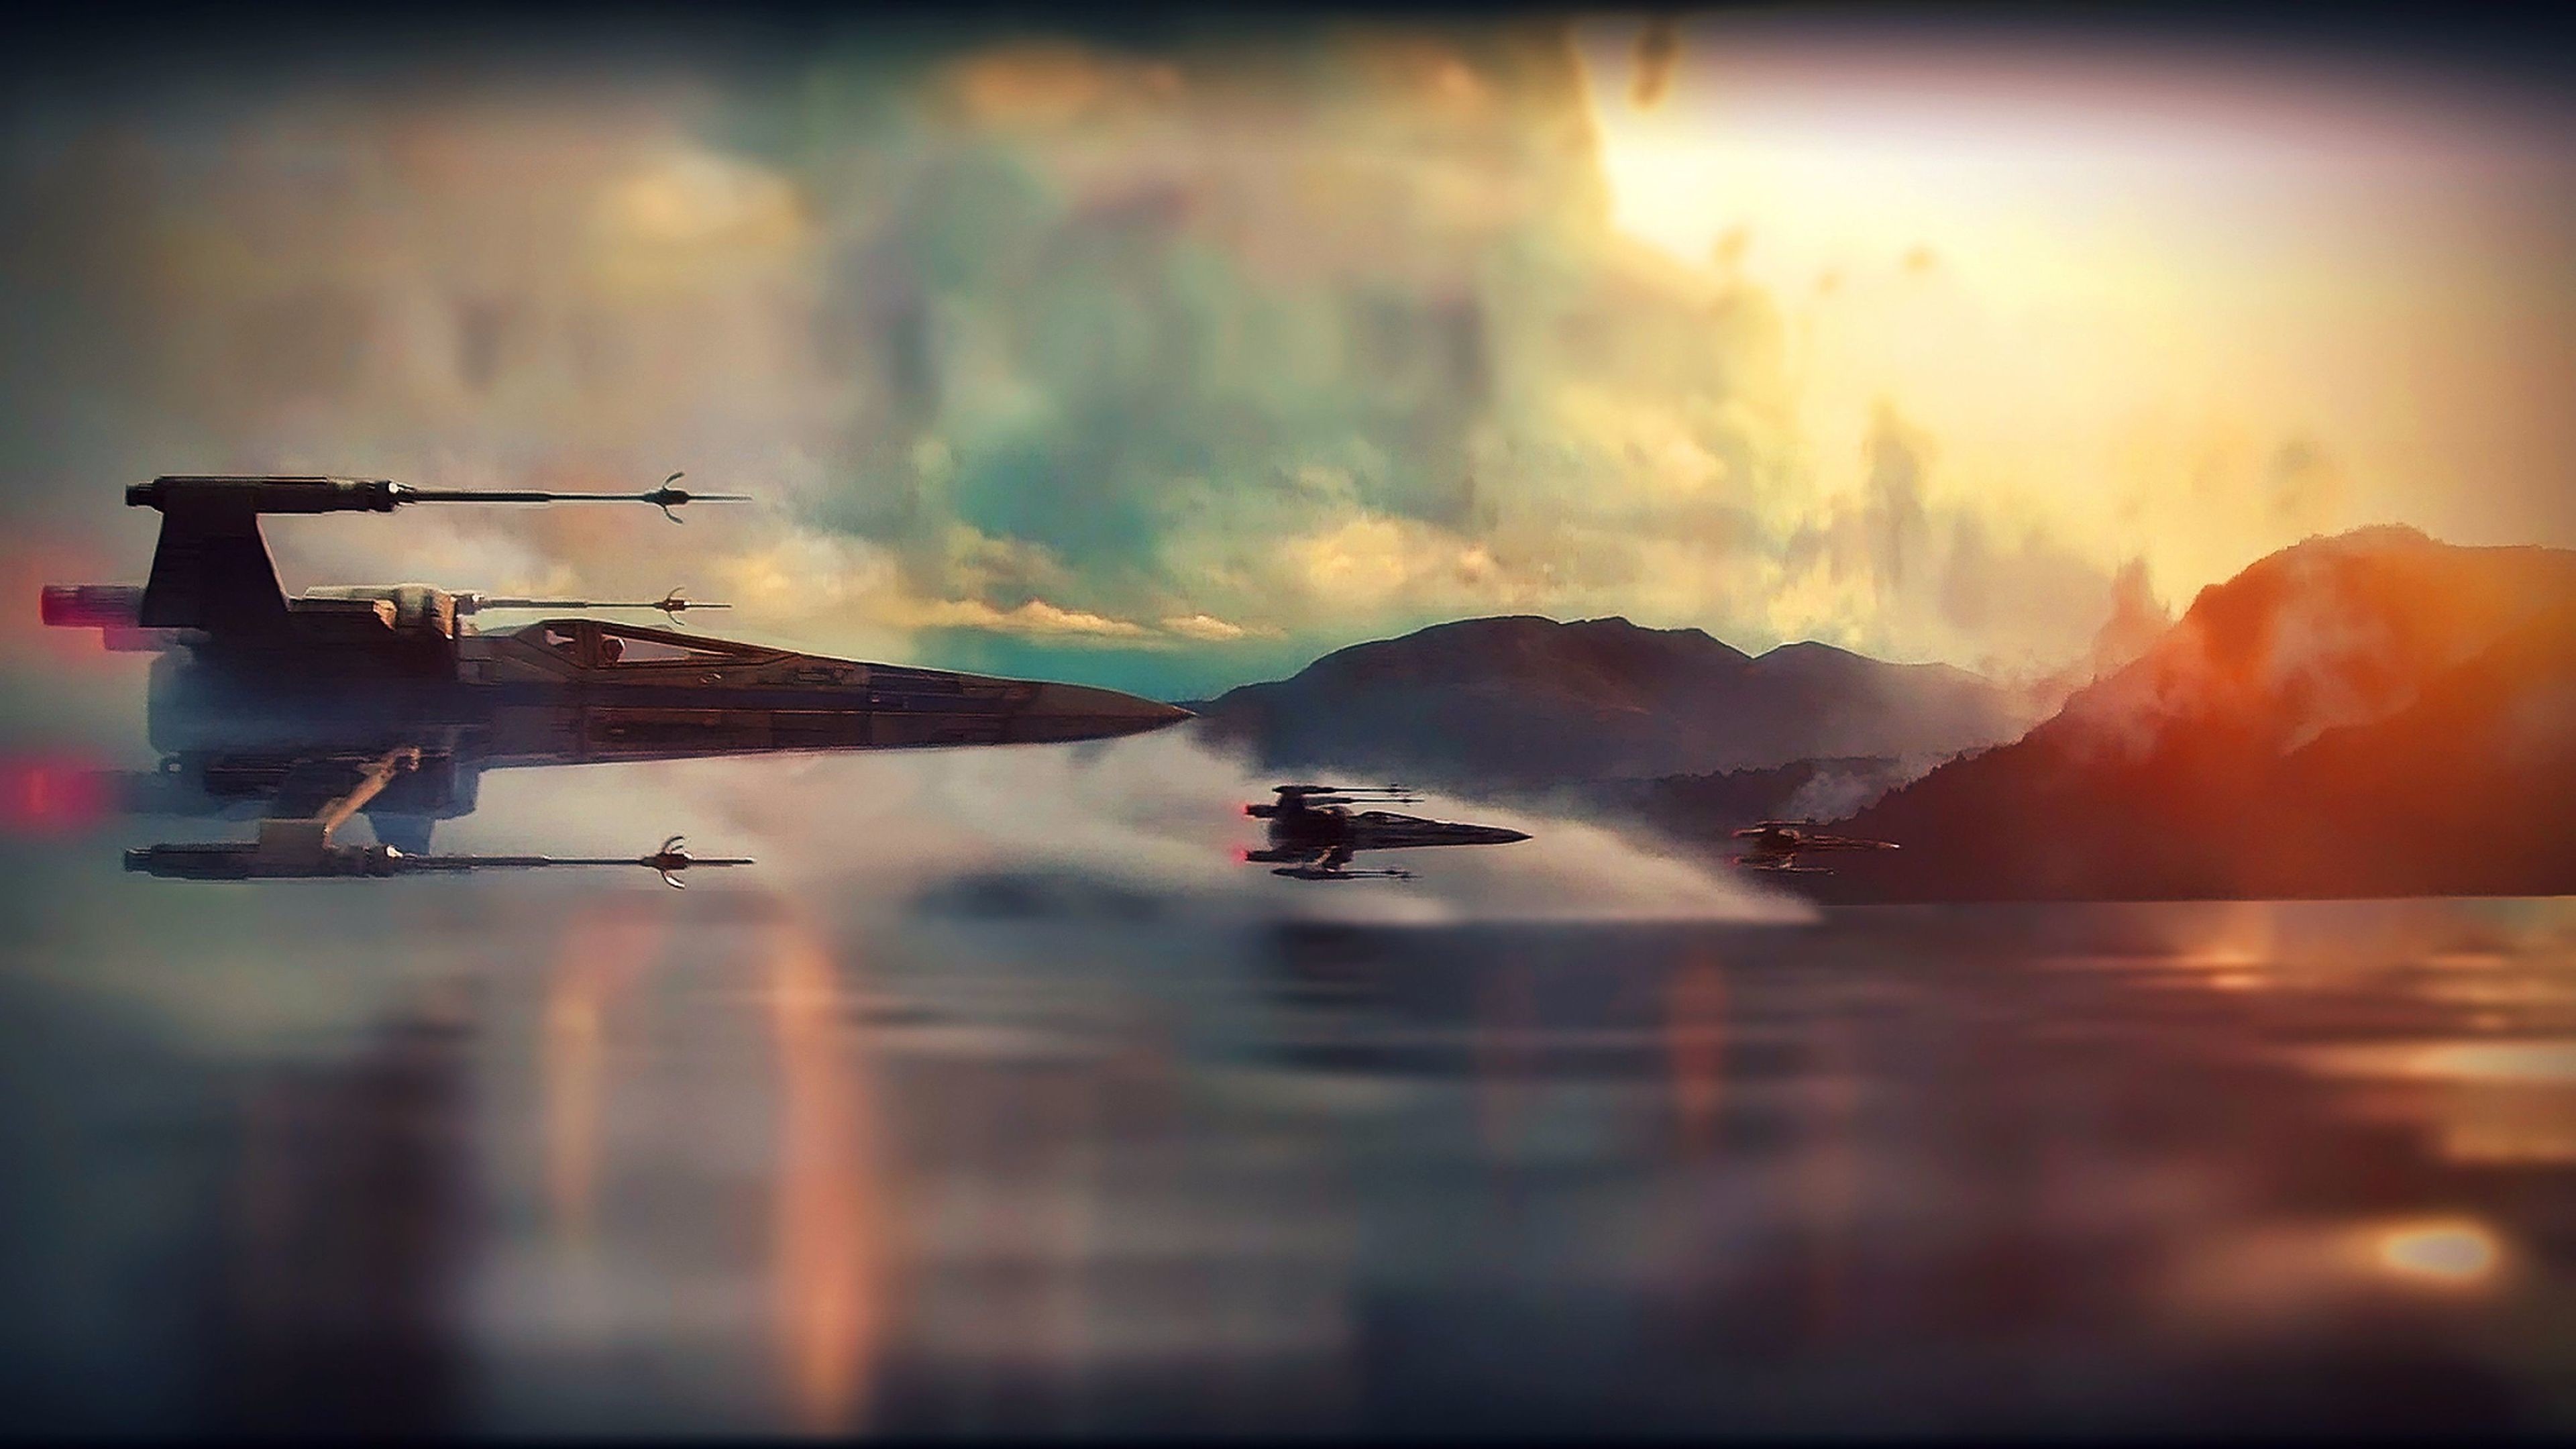 Star Wars 4k Wallpaper Image